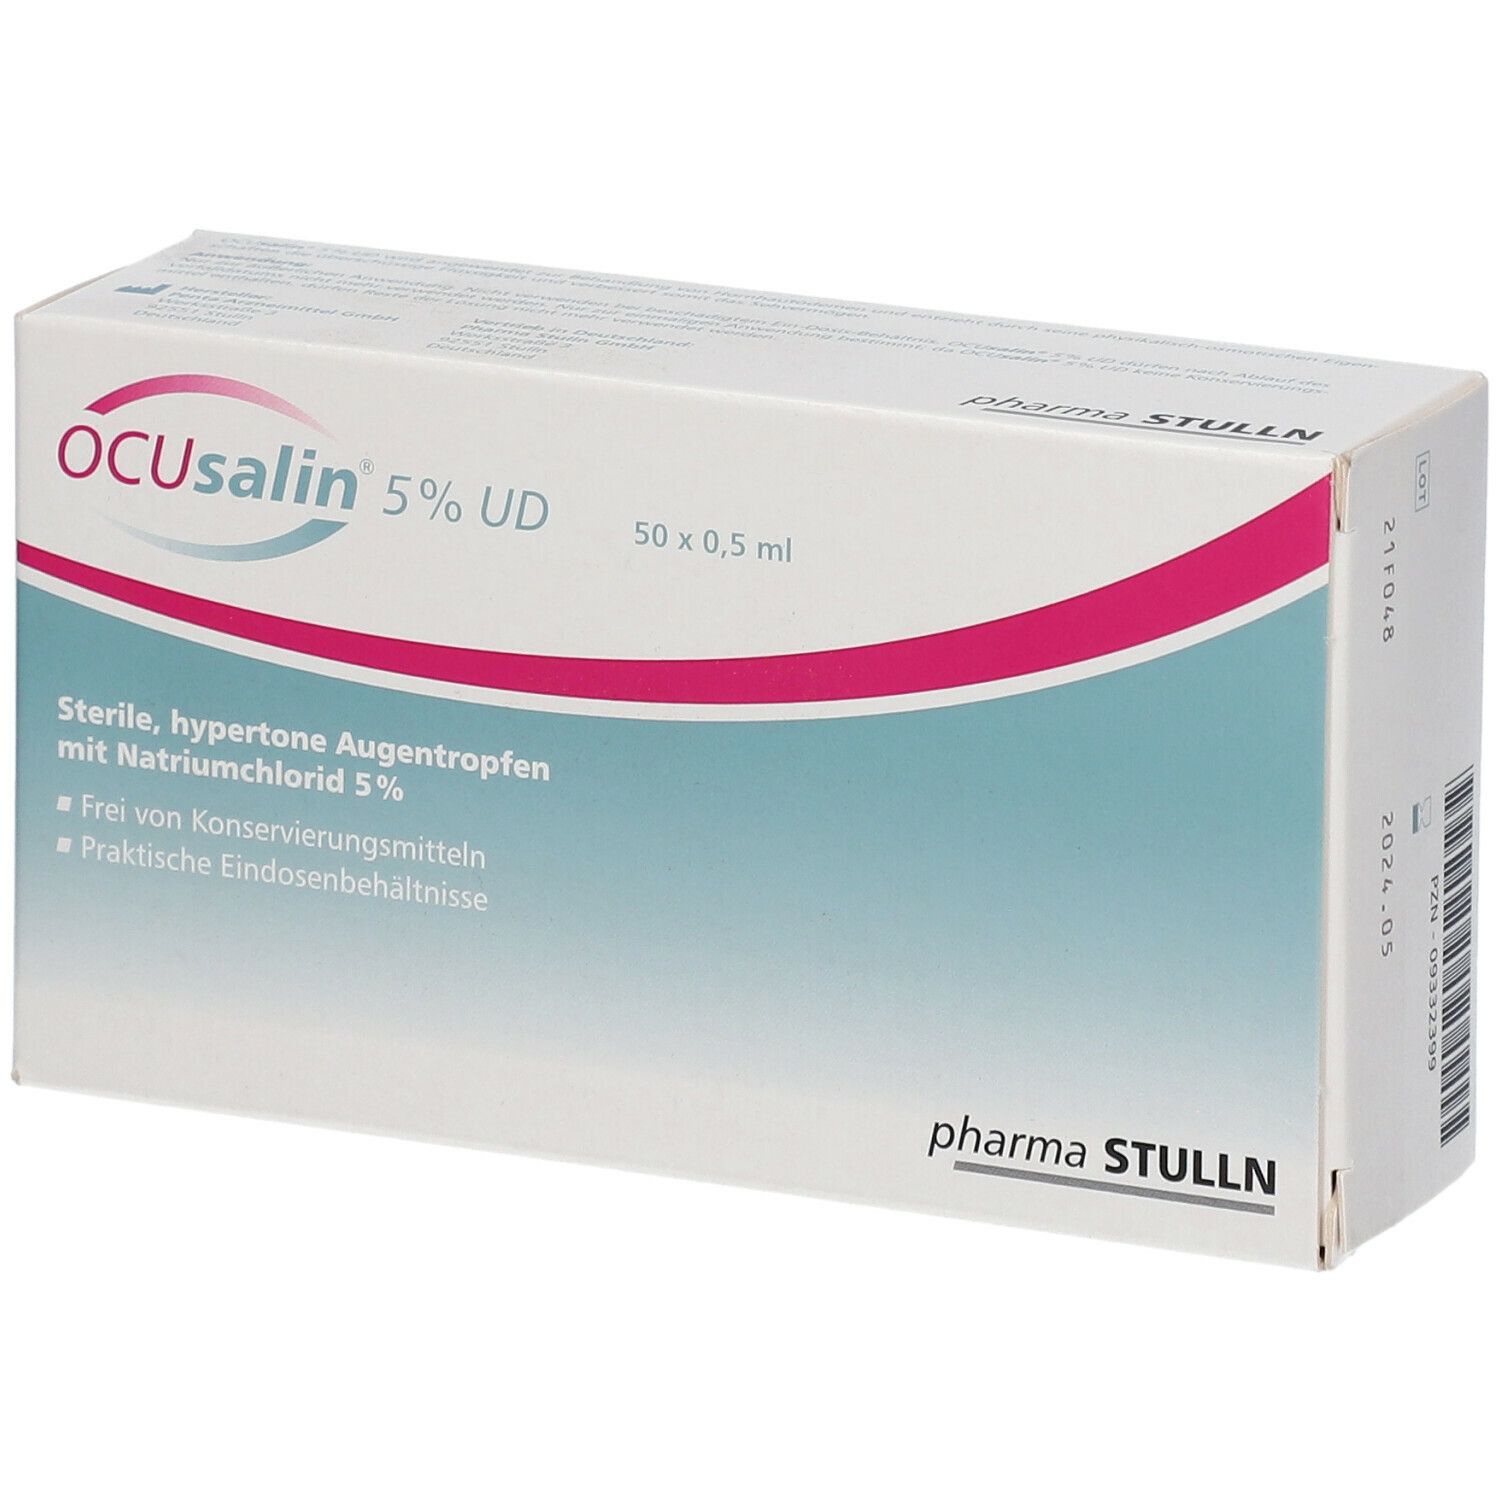 OCUsalin® 5% UD